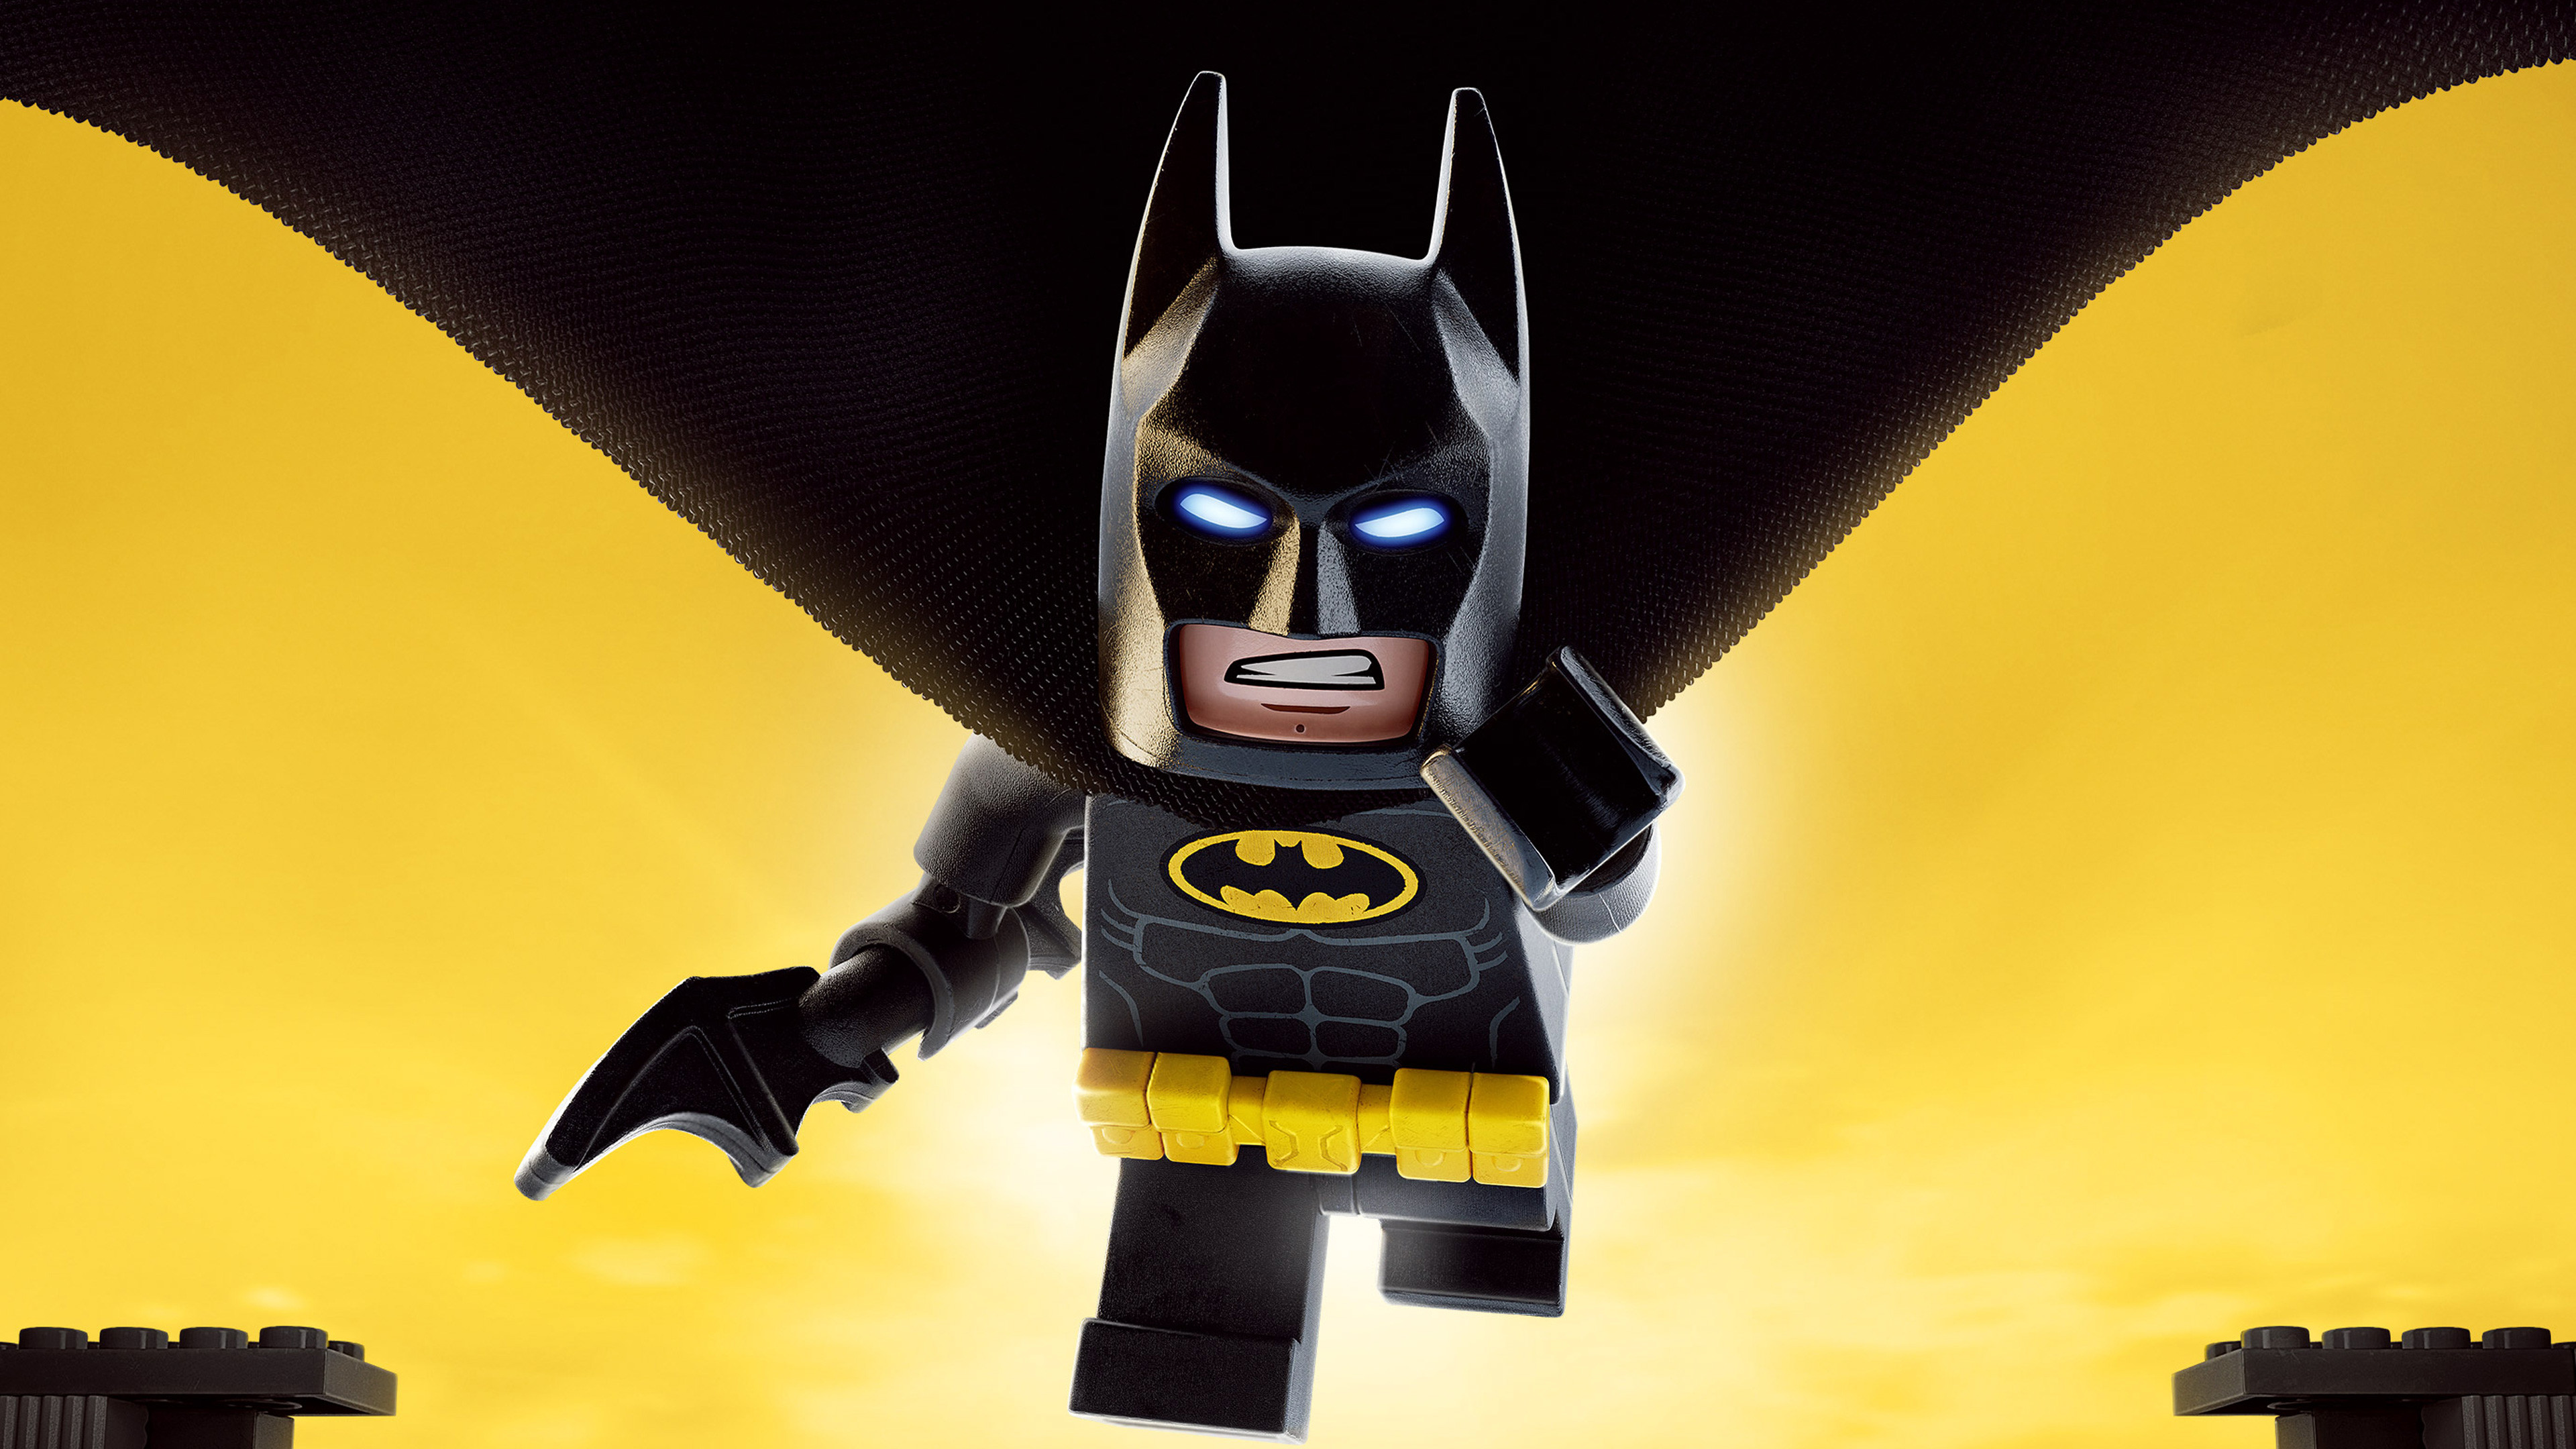 The Lego Batman Movie 4K 2017